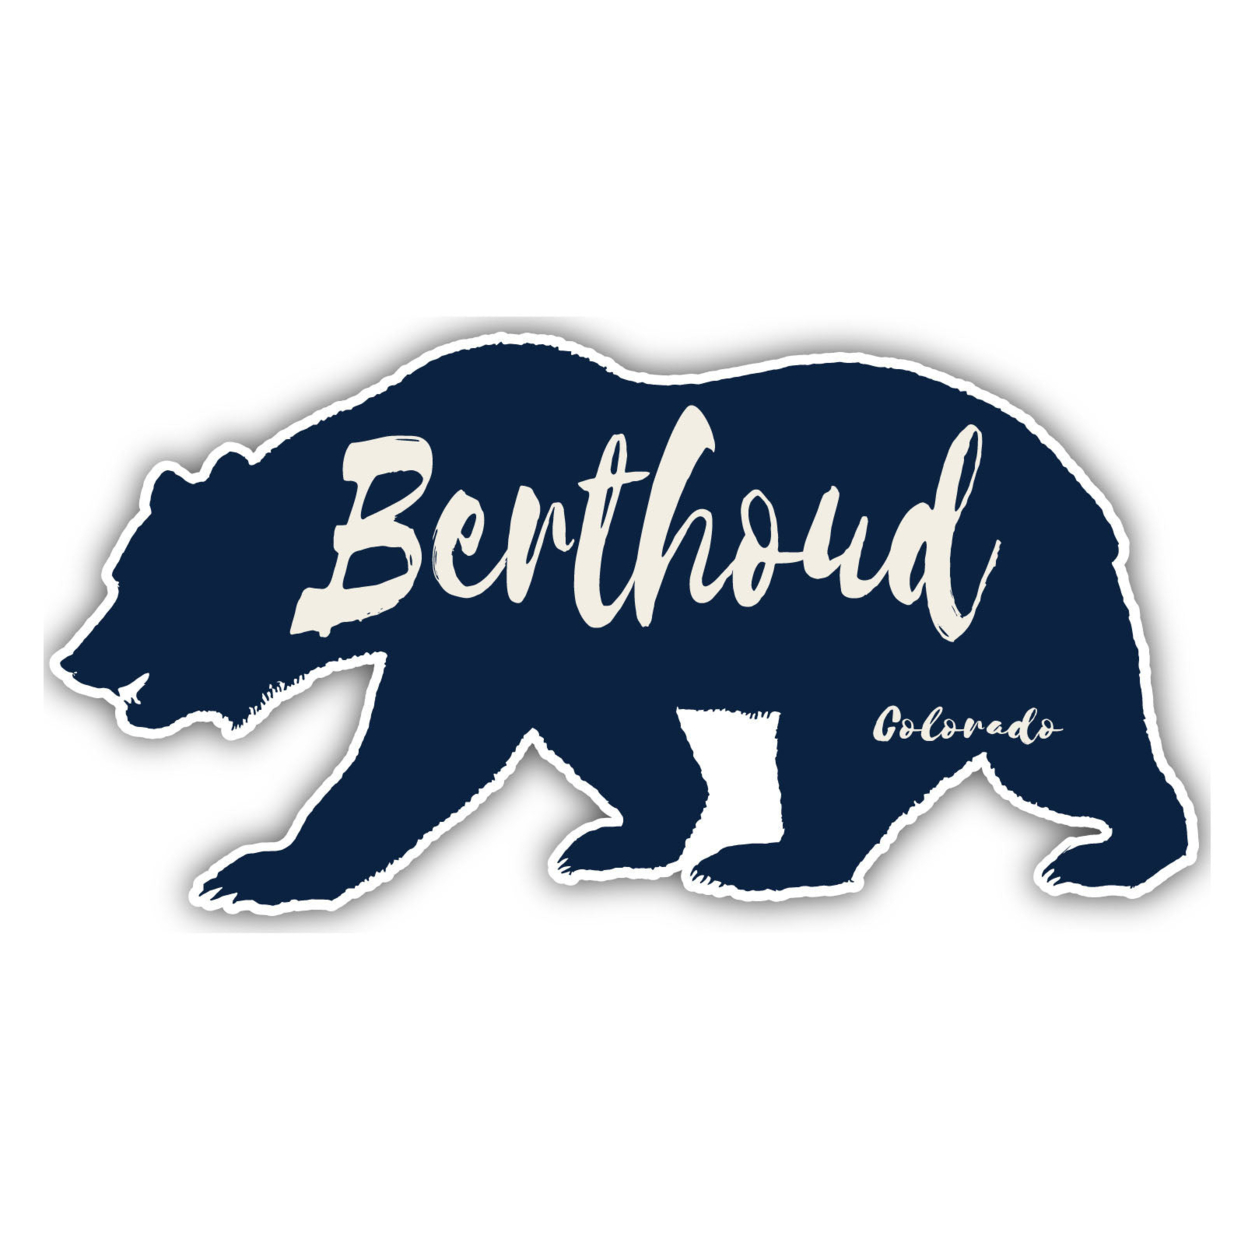 Berthoud Colorado Souvenir Decorative Stickers (Choose Theme And Size) - Single Unit, 8-Inch, Bear